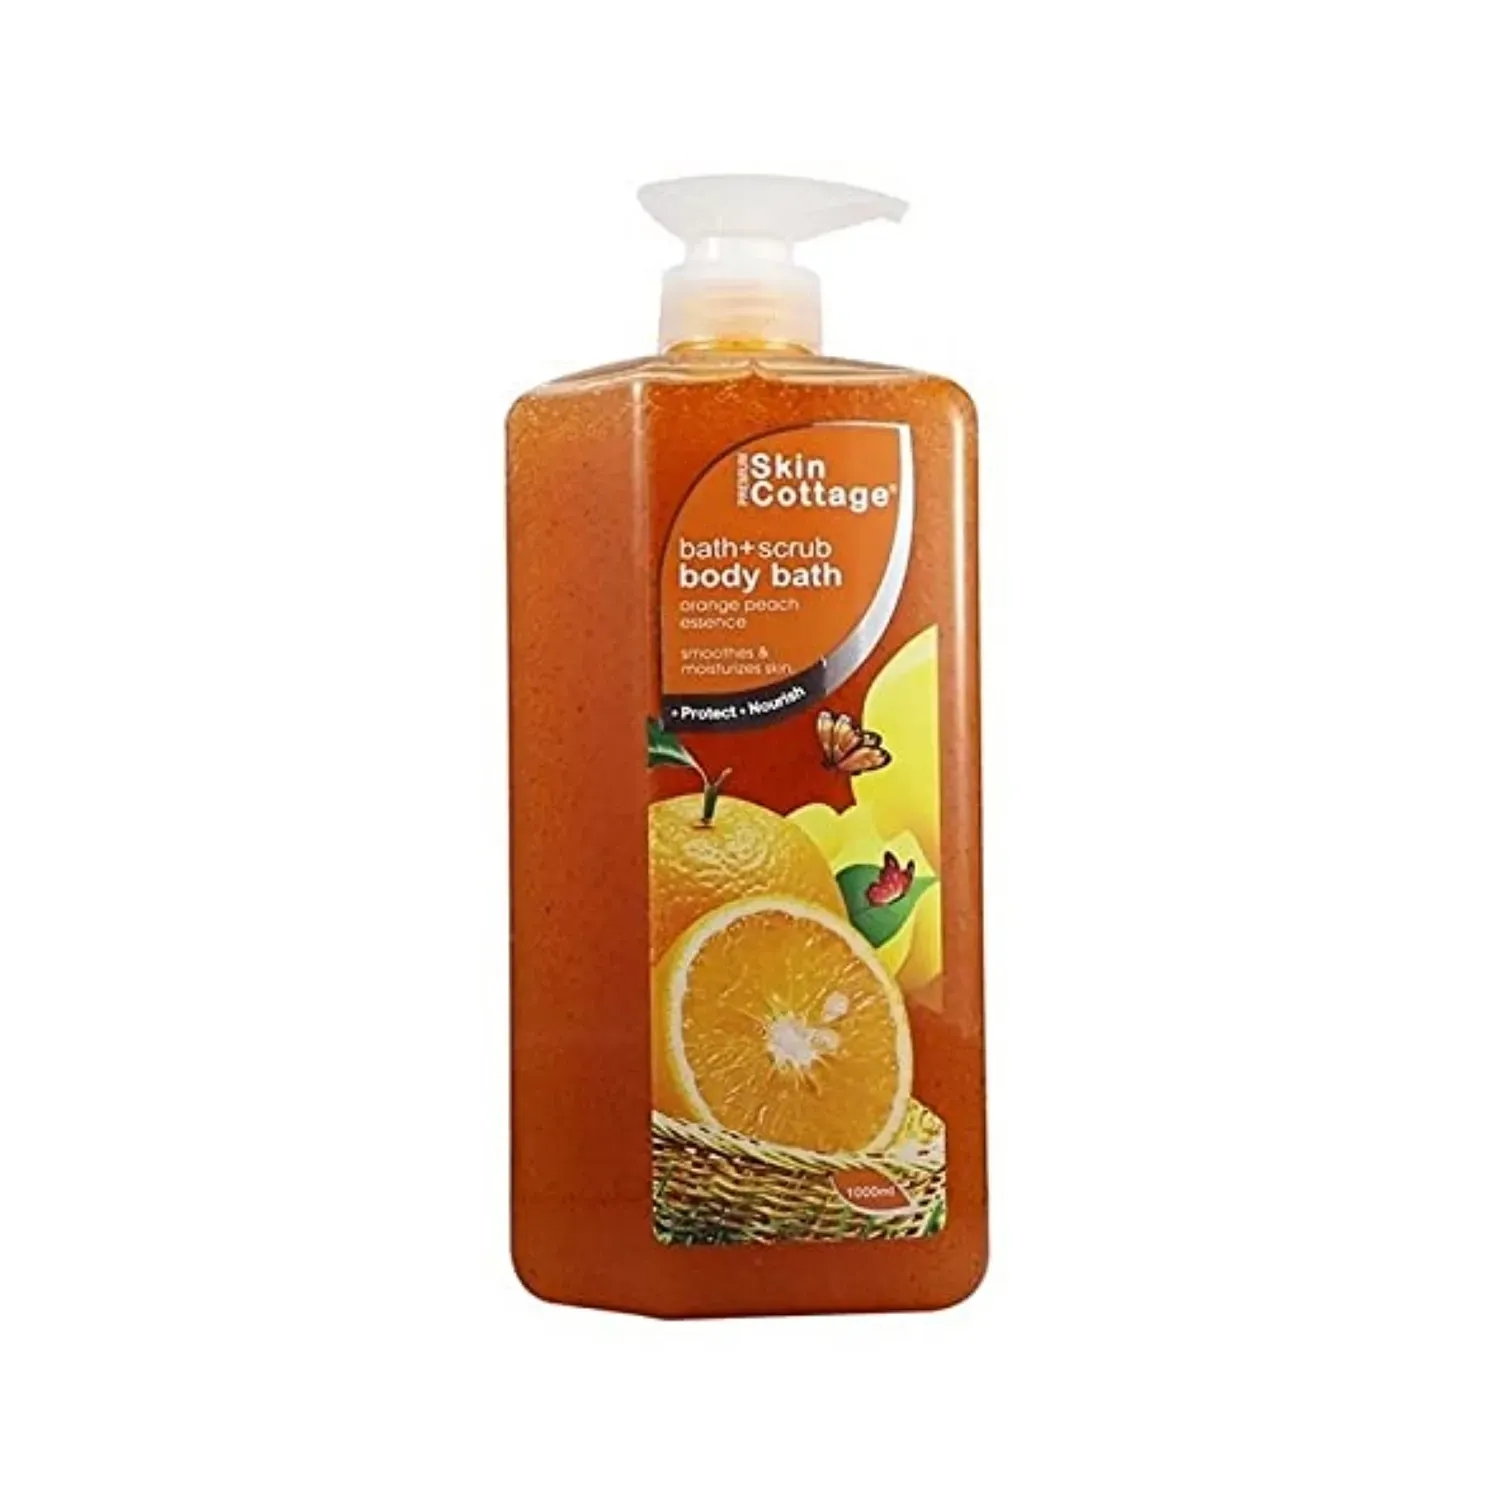 SKIN COTTAGE | SKIN COTTAGE Orange Peach Body Bath + Scrub (1000ml)